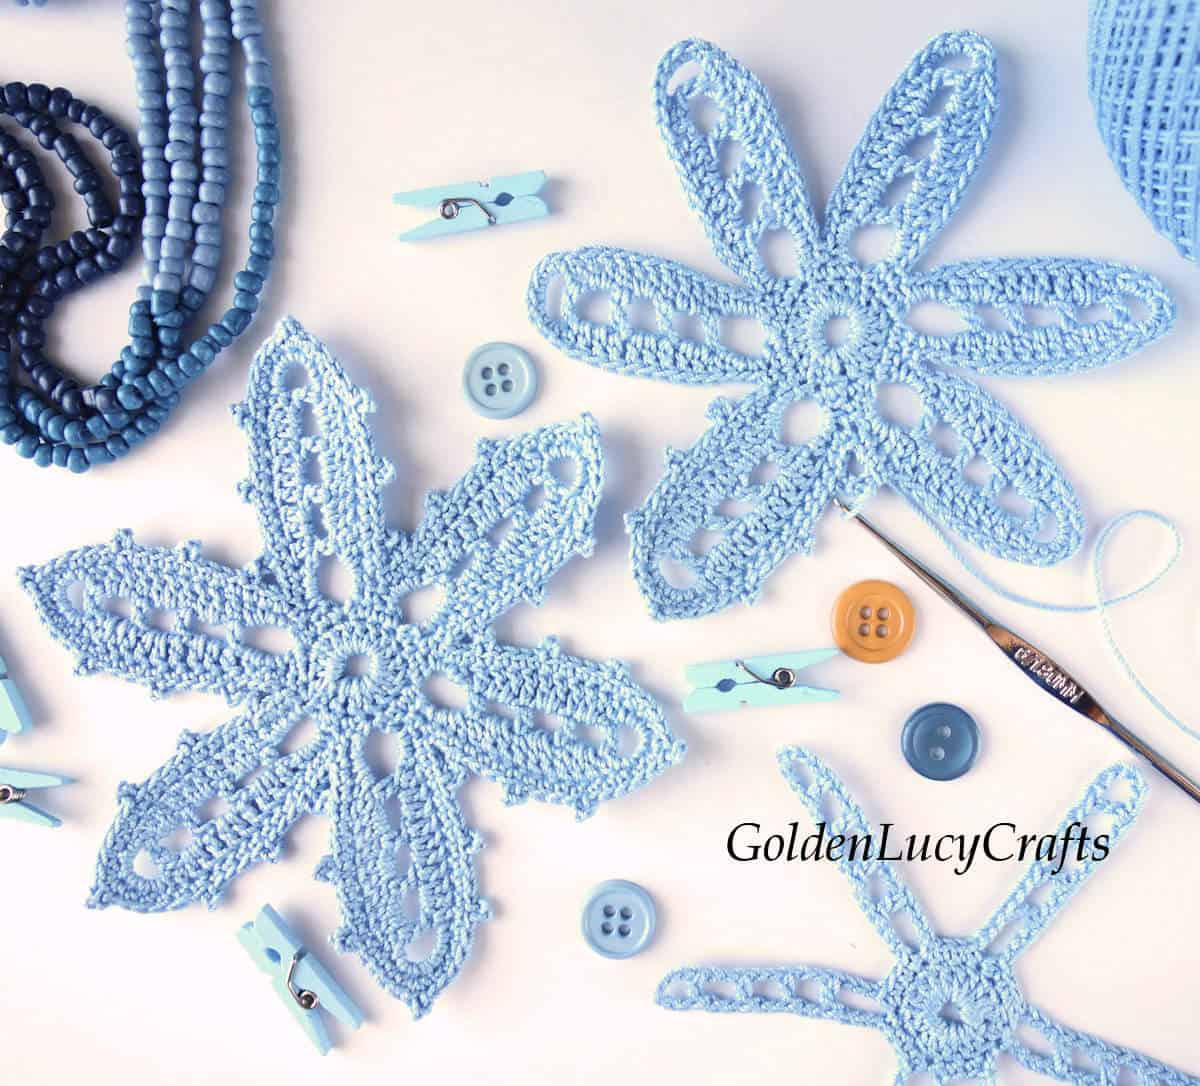 Crocheted light blue flowers, buttons, crochet hook and clothespin.